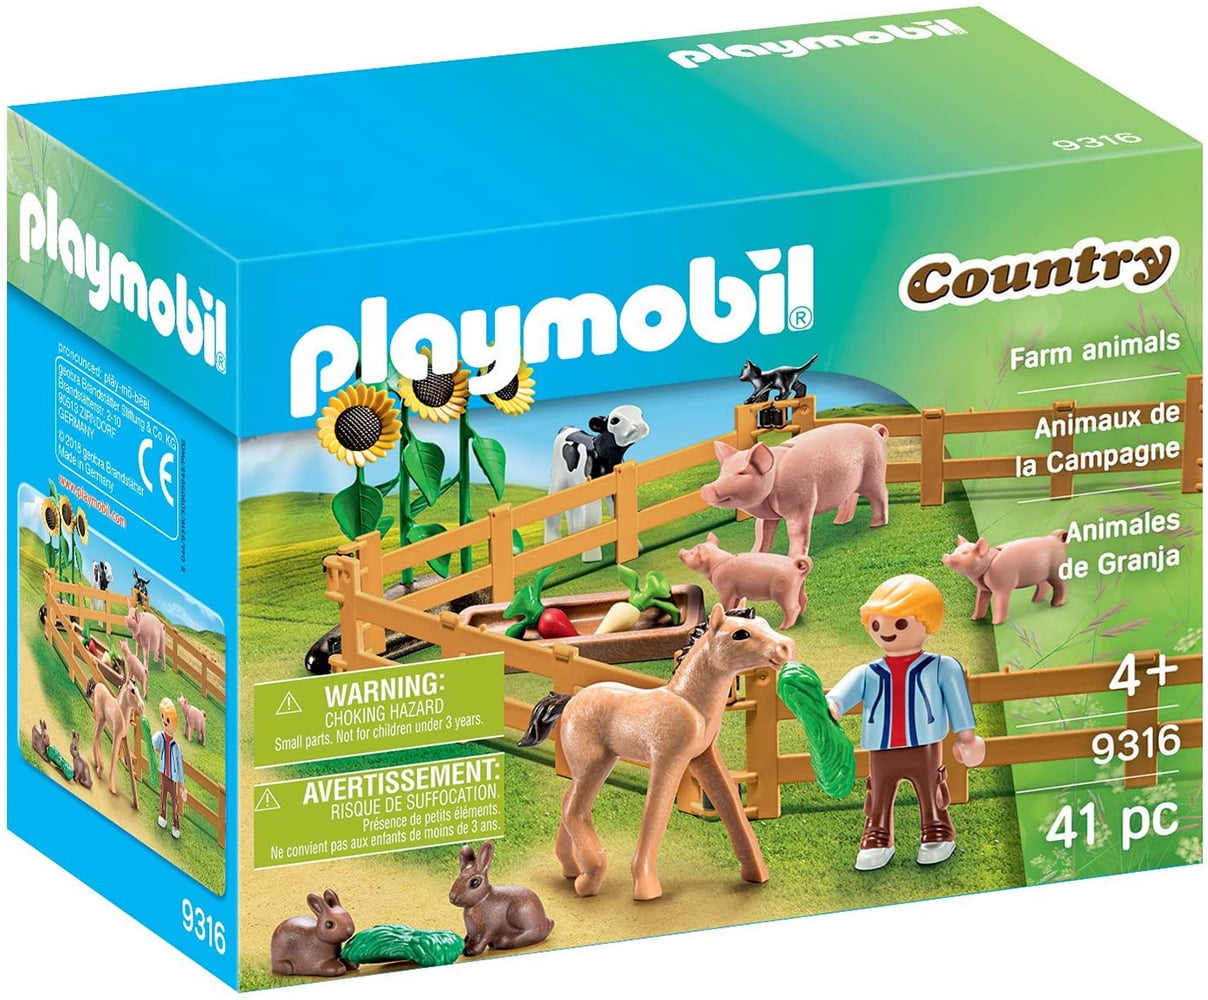 3 puppies/small dogs NEW Playmobil dollshouse pets/vets/farm animals 